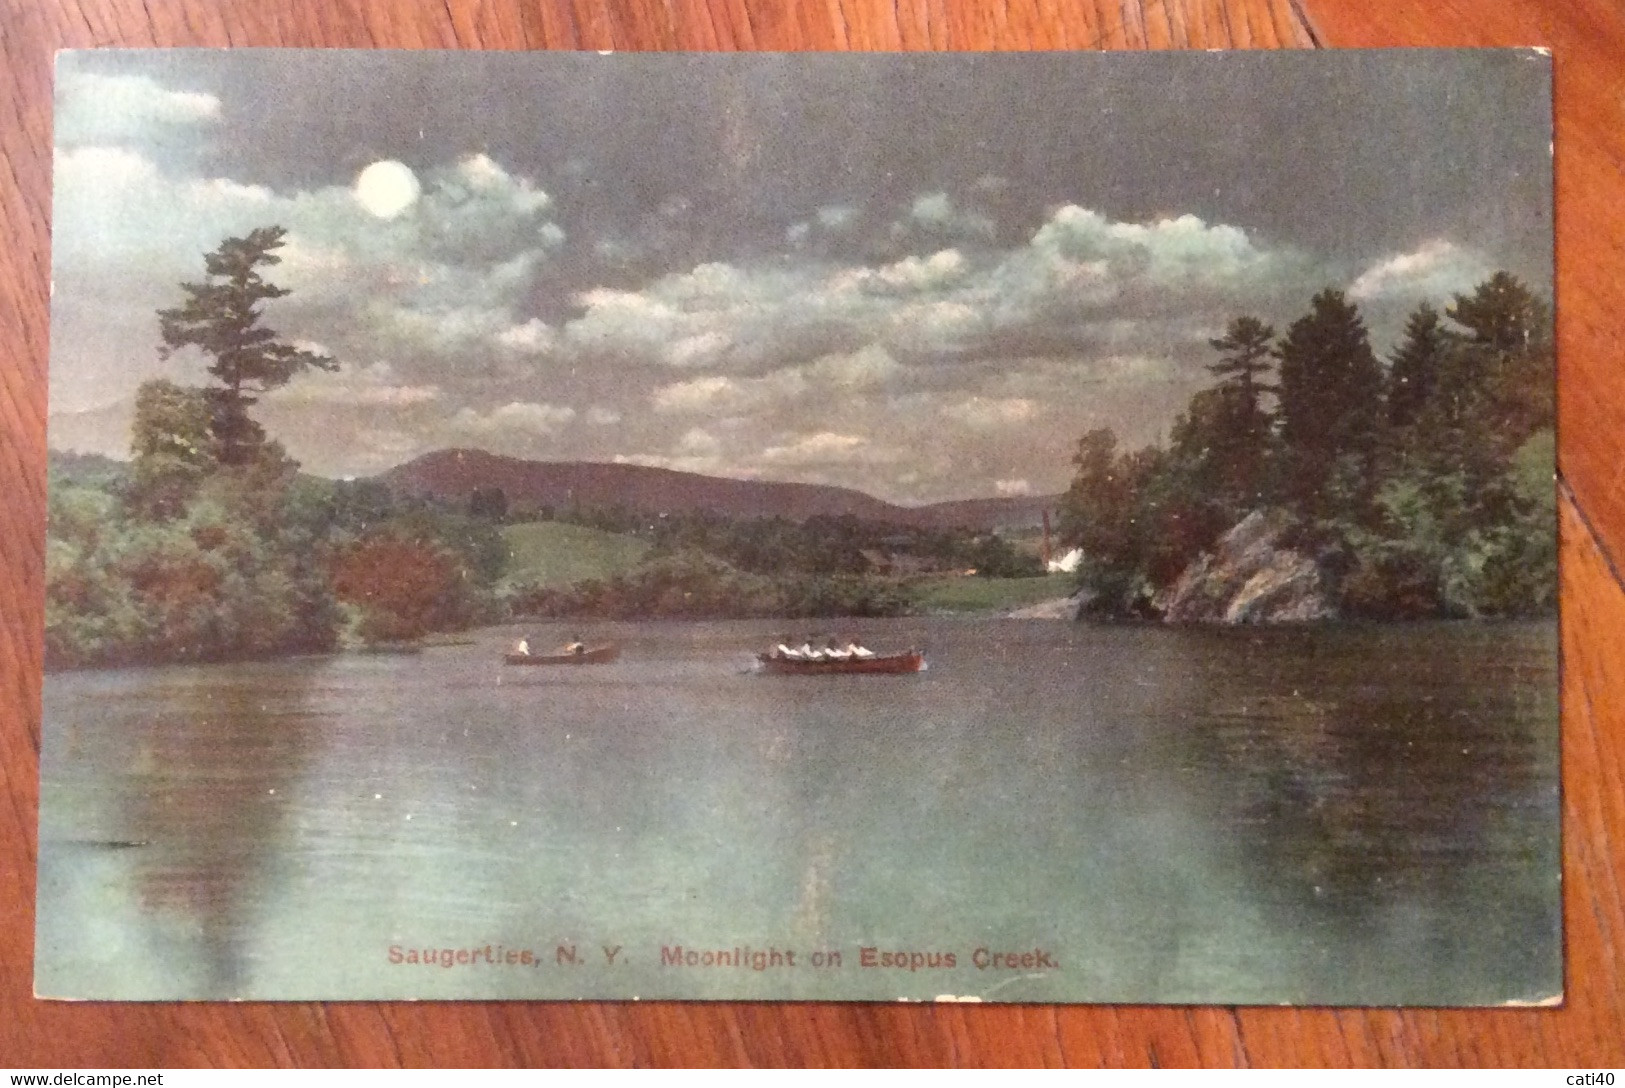 USA - SAUGERTIES  MOONLIGHT  ON ESOPUS CREEK  - VINTAGE POST CARD  1912 - Fall River